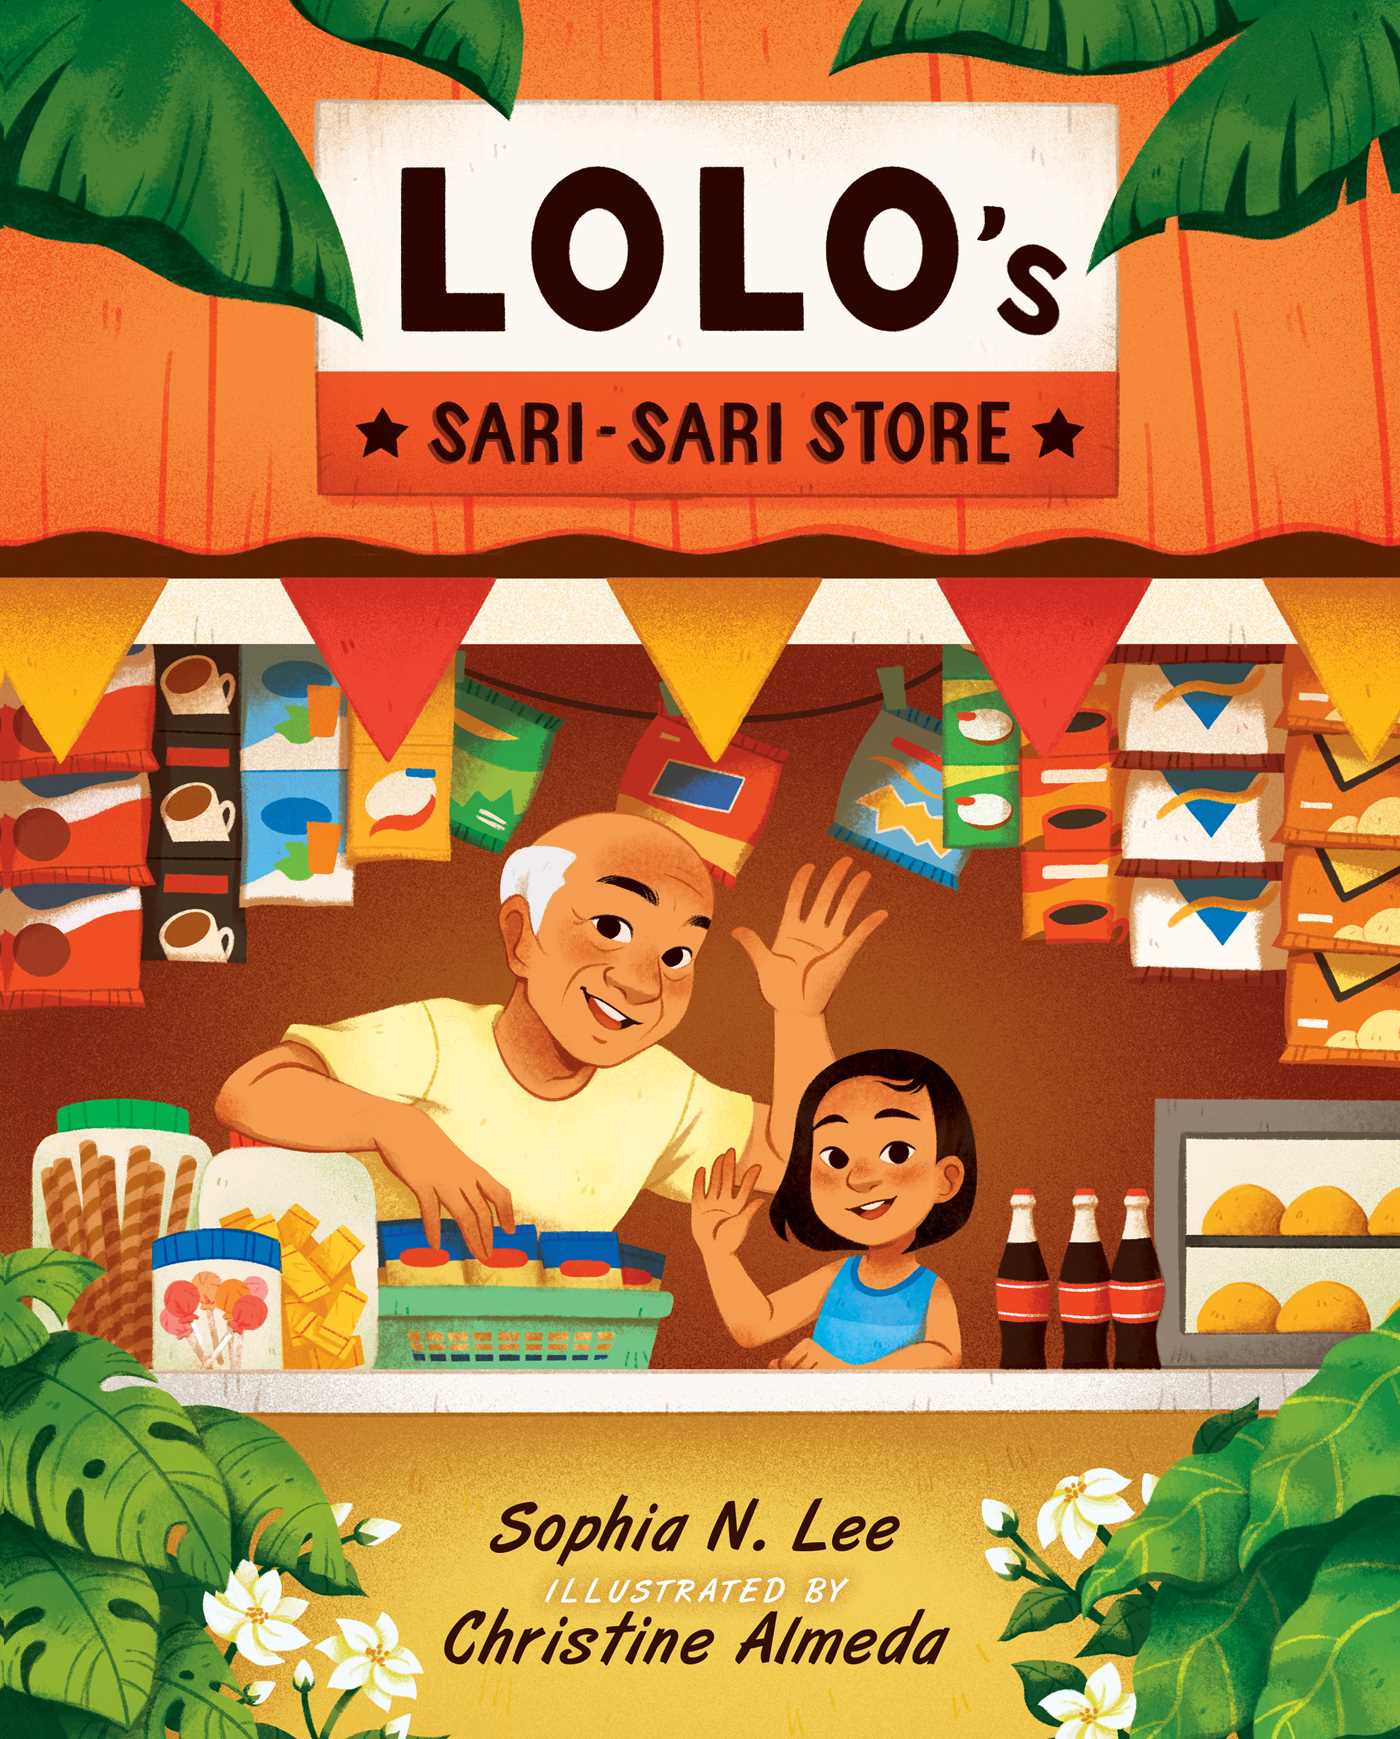 Interview with Sophia N. Lee and Christine Almeda, Creators of Lolo’s Sari-sari Store